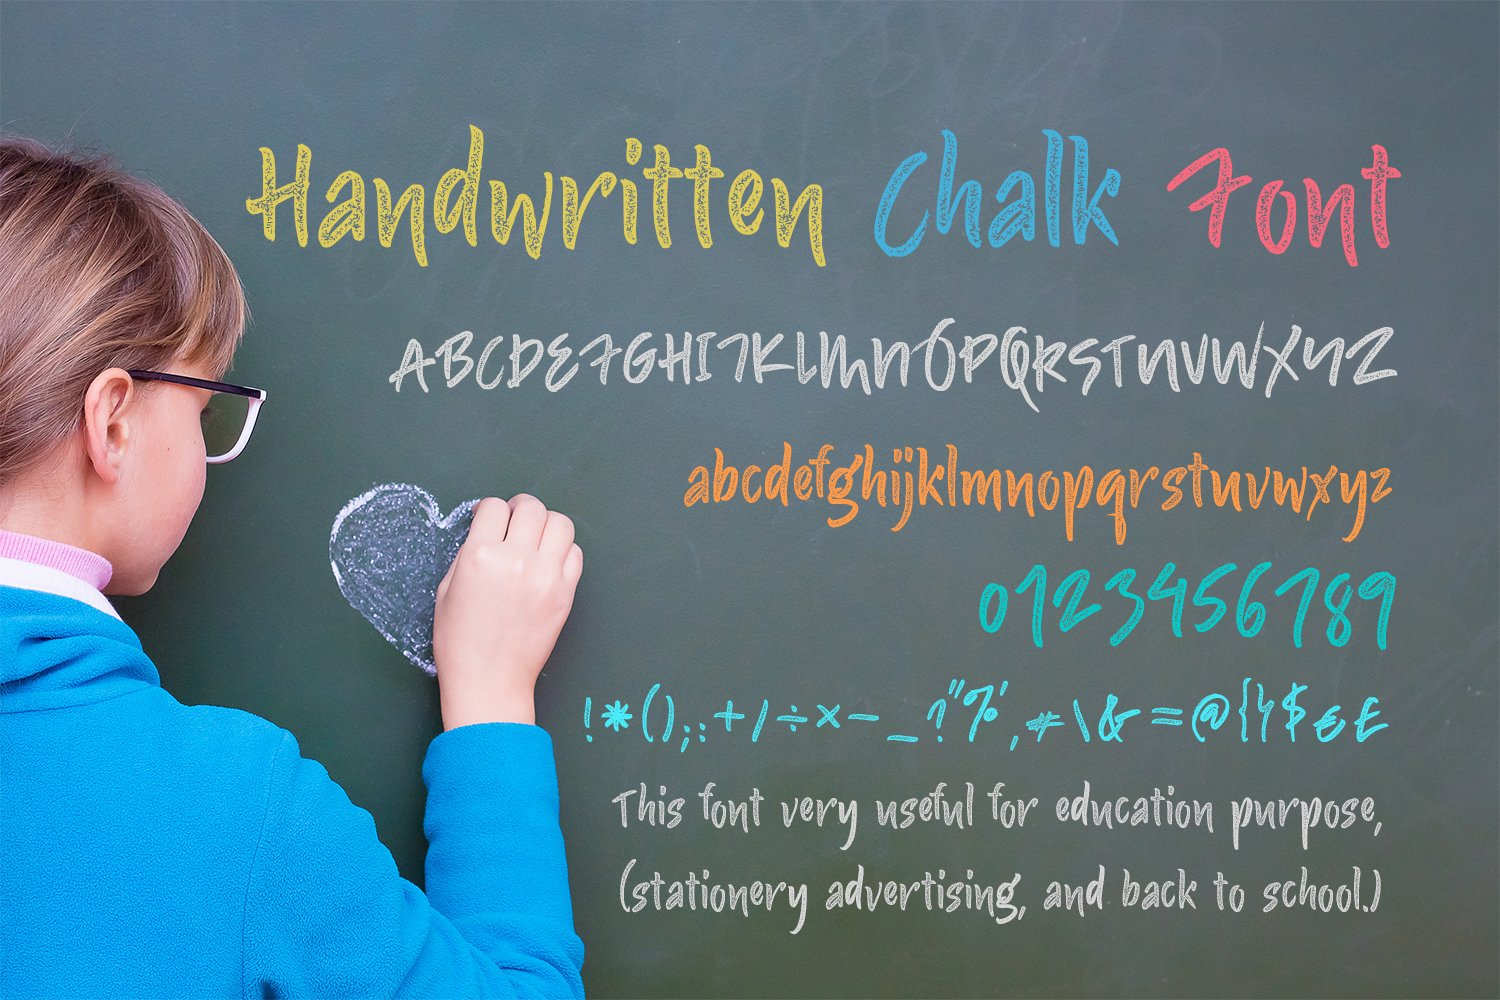 Handwritten Chalk Font cover image.